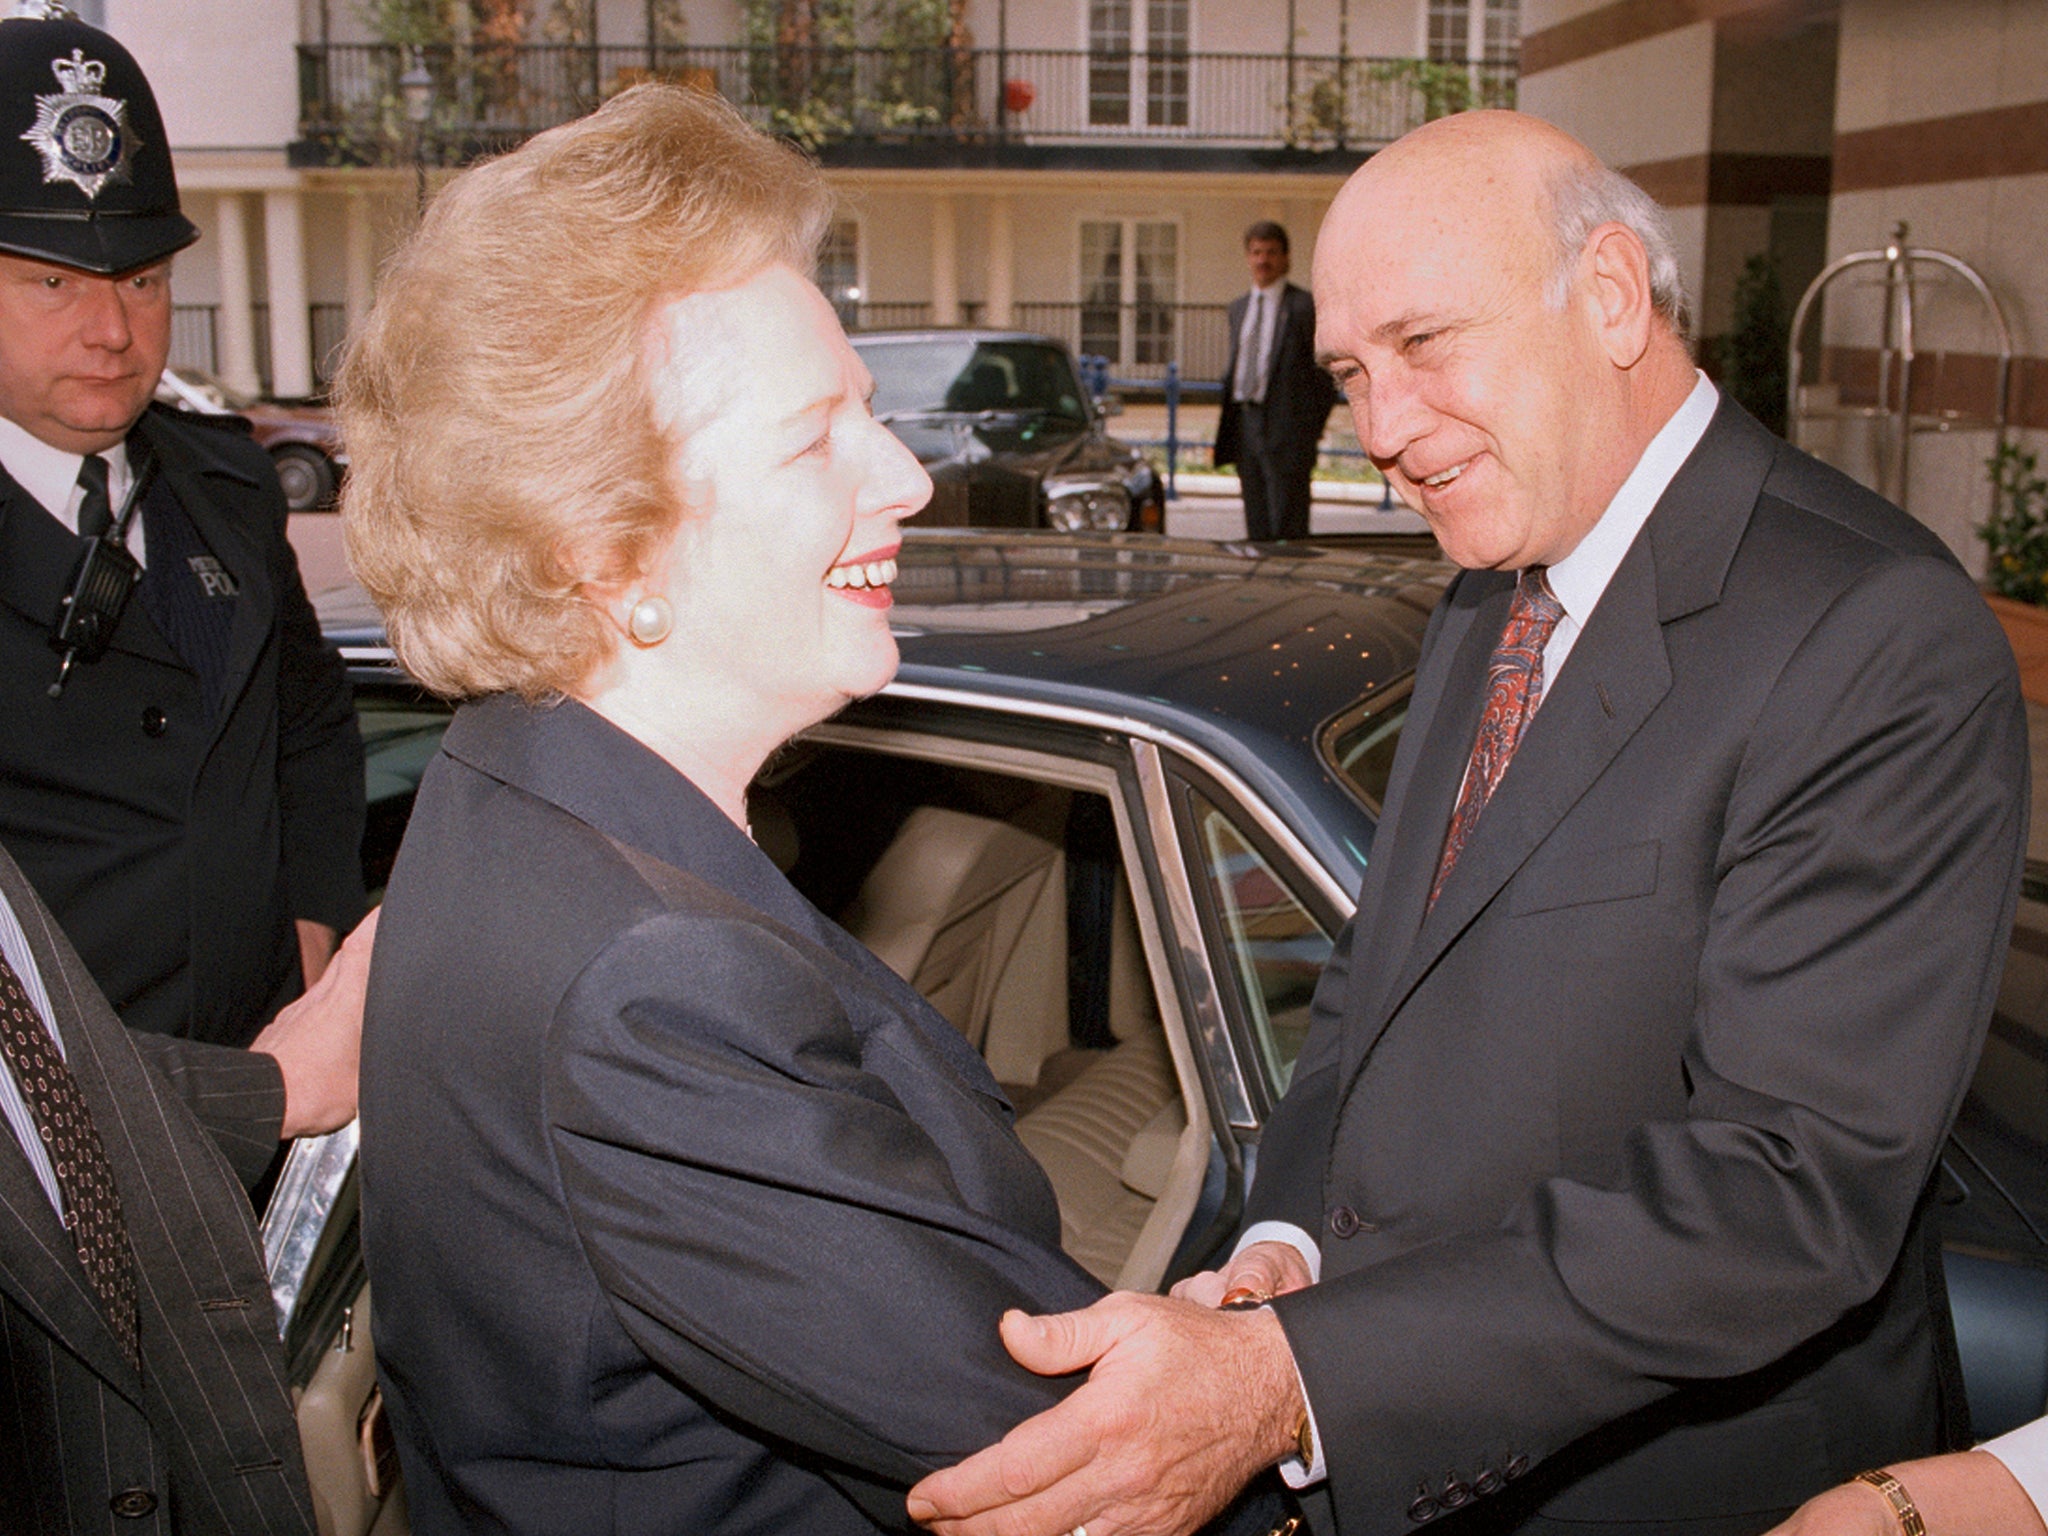 De Klerk bids farewell to Margaret Thatcher following a series on talks in 1991